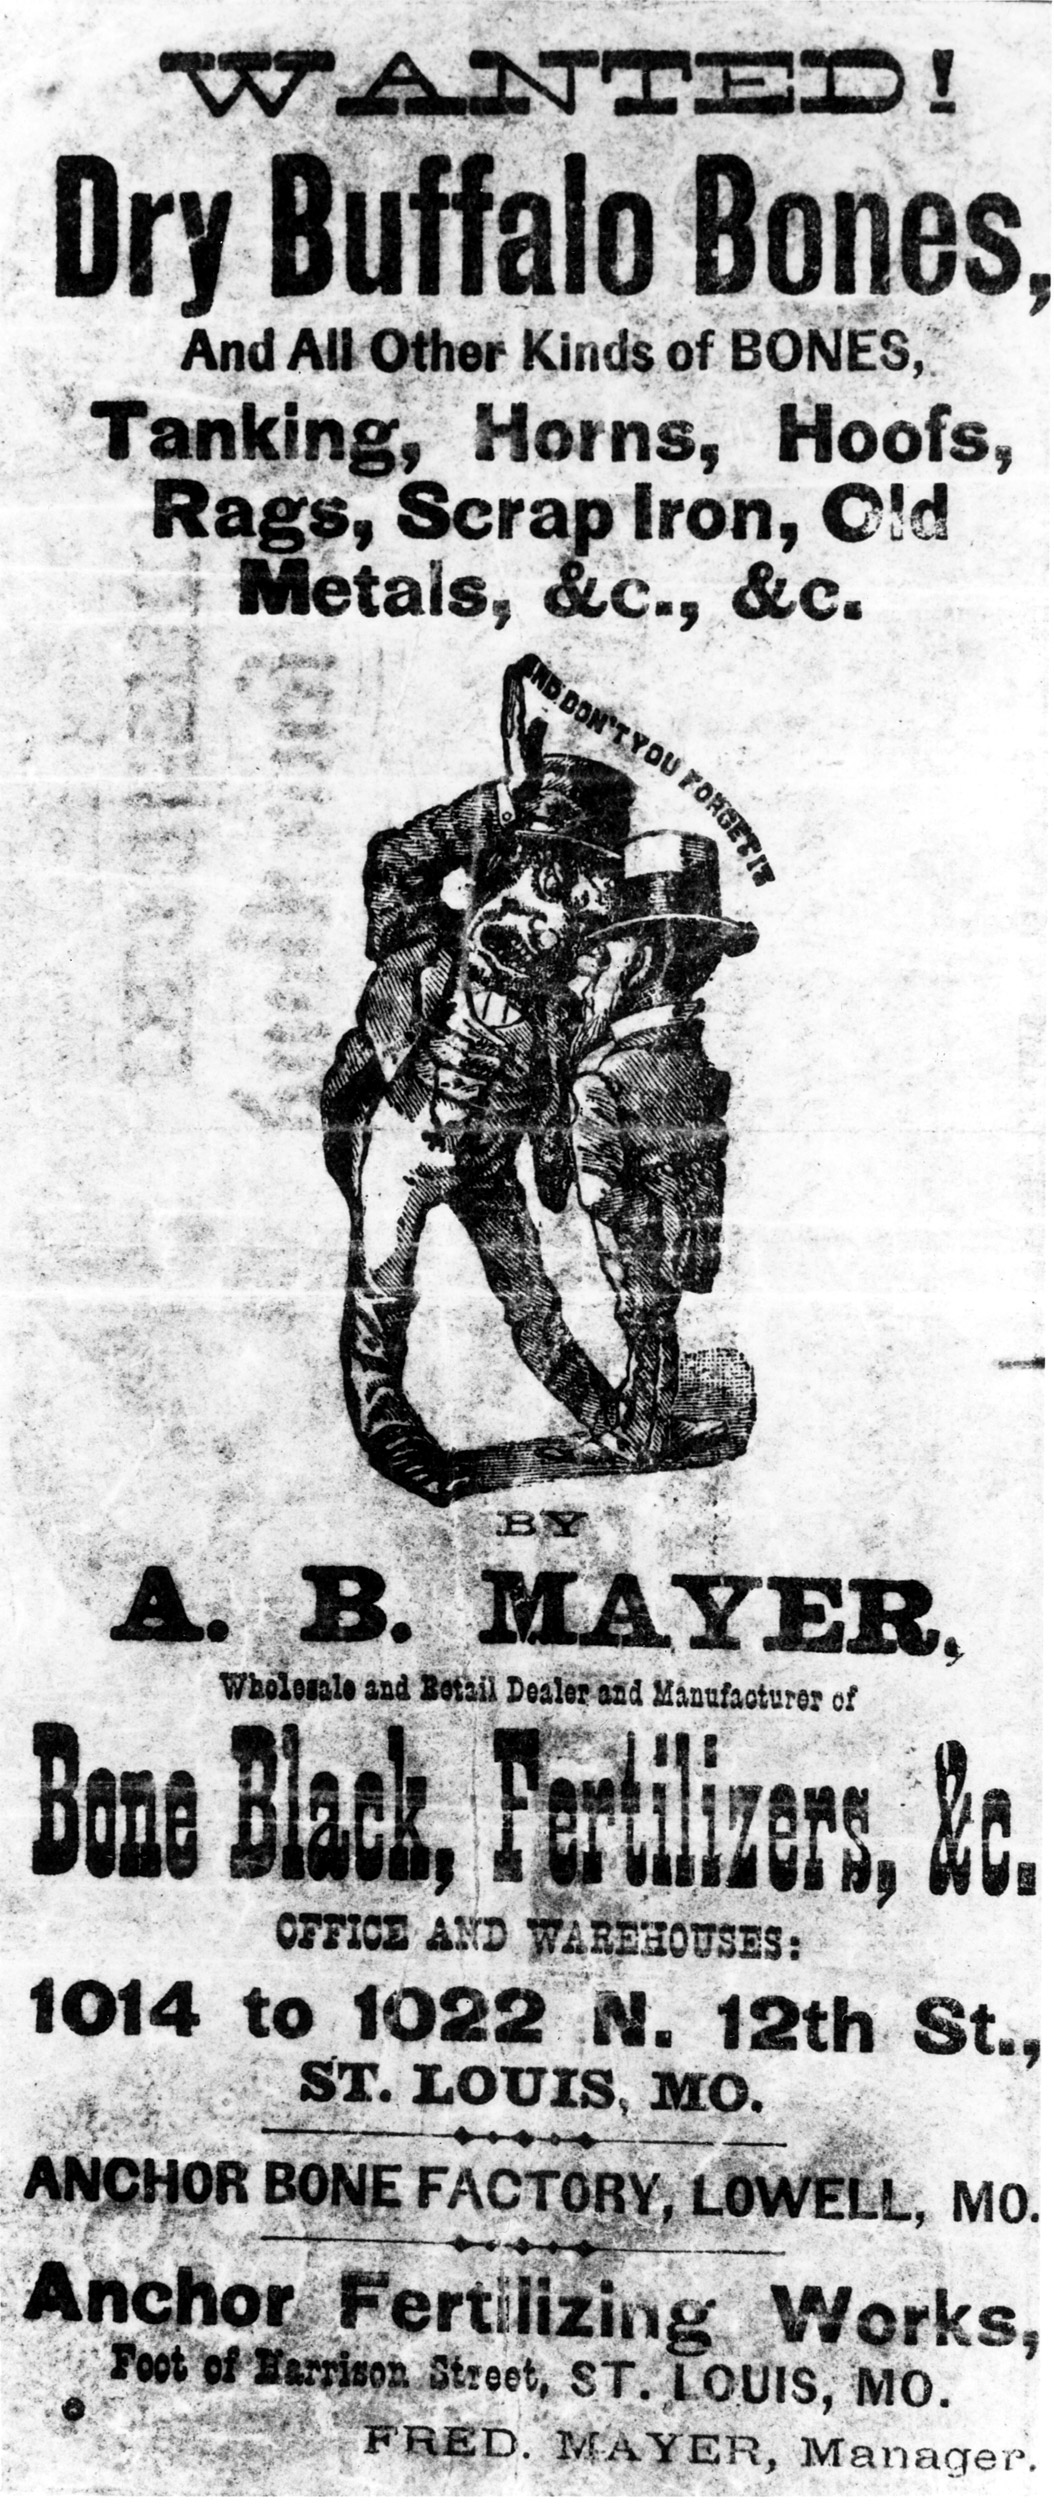 Newspaper Ad for Buffalo bones